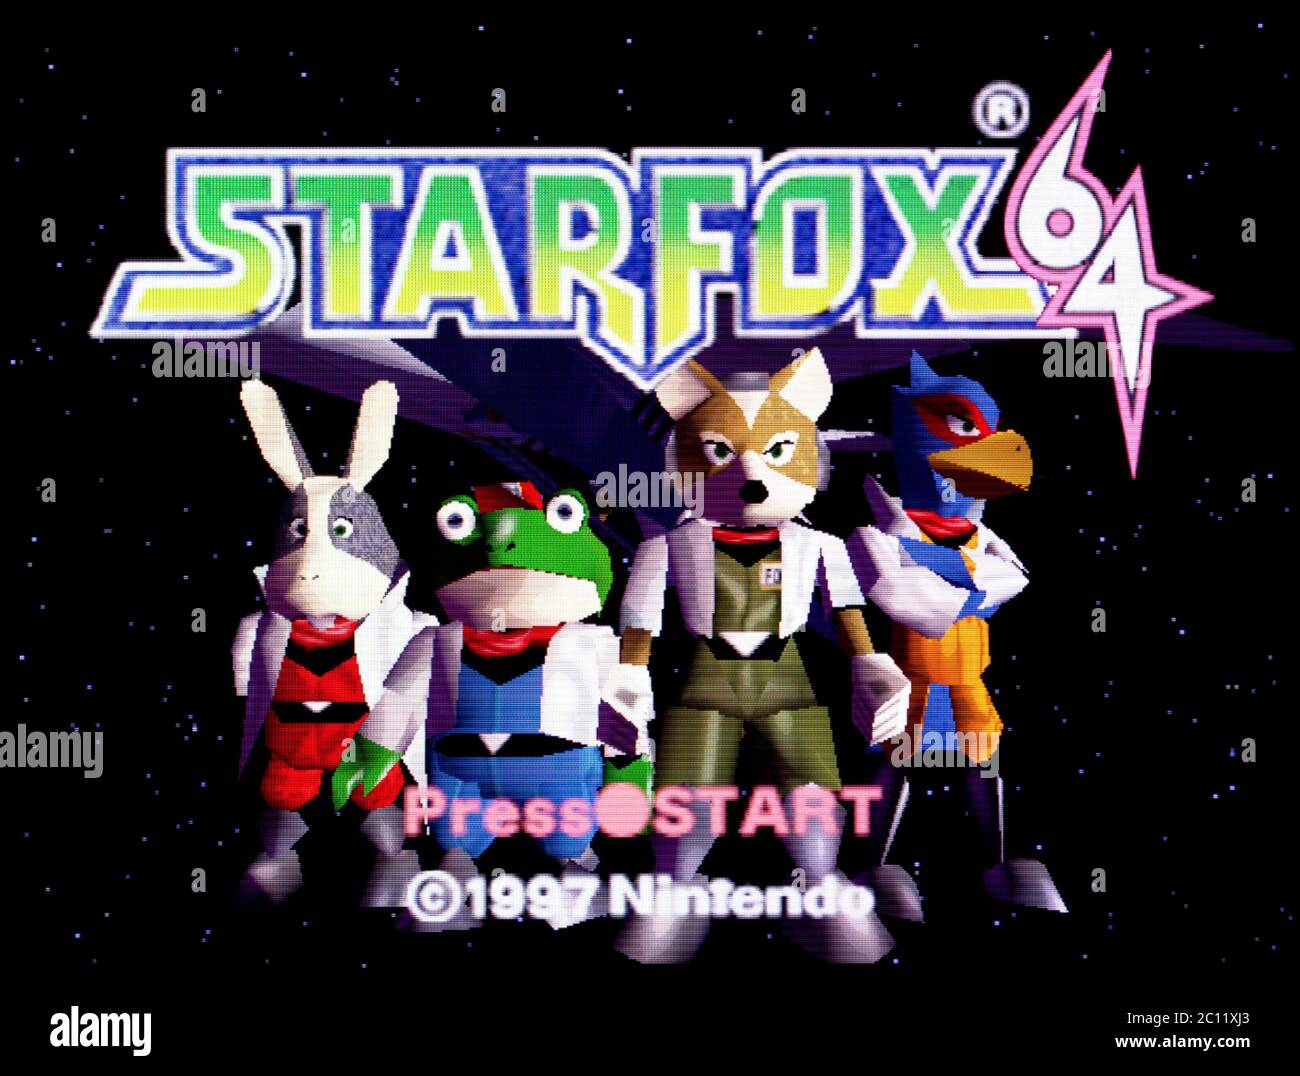 Starfox 64 Star Fox - Nintendo Videogame - Editorial use Stock Photo - Alamy